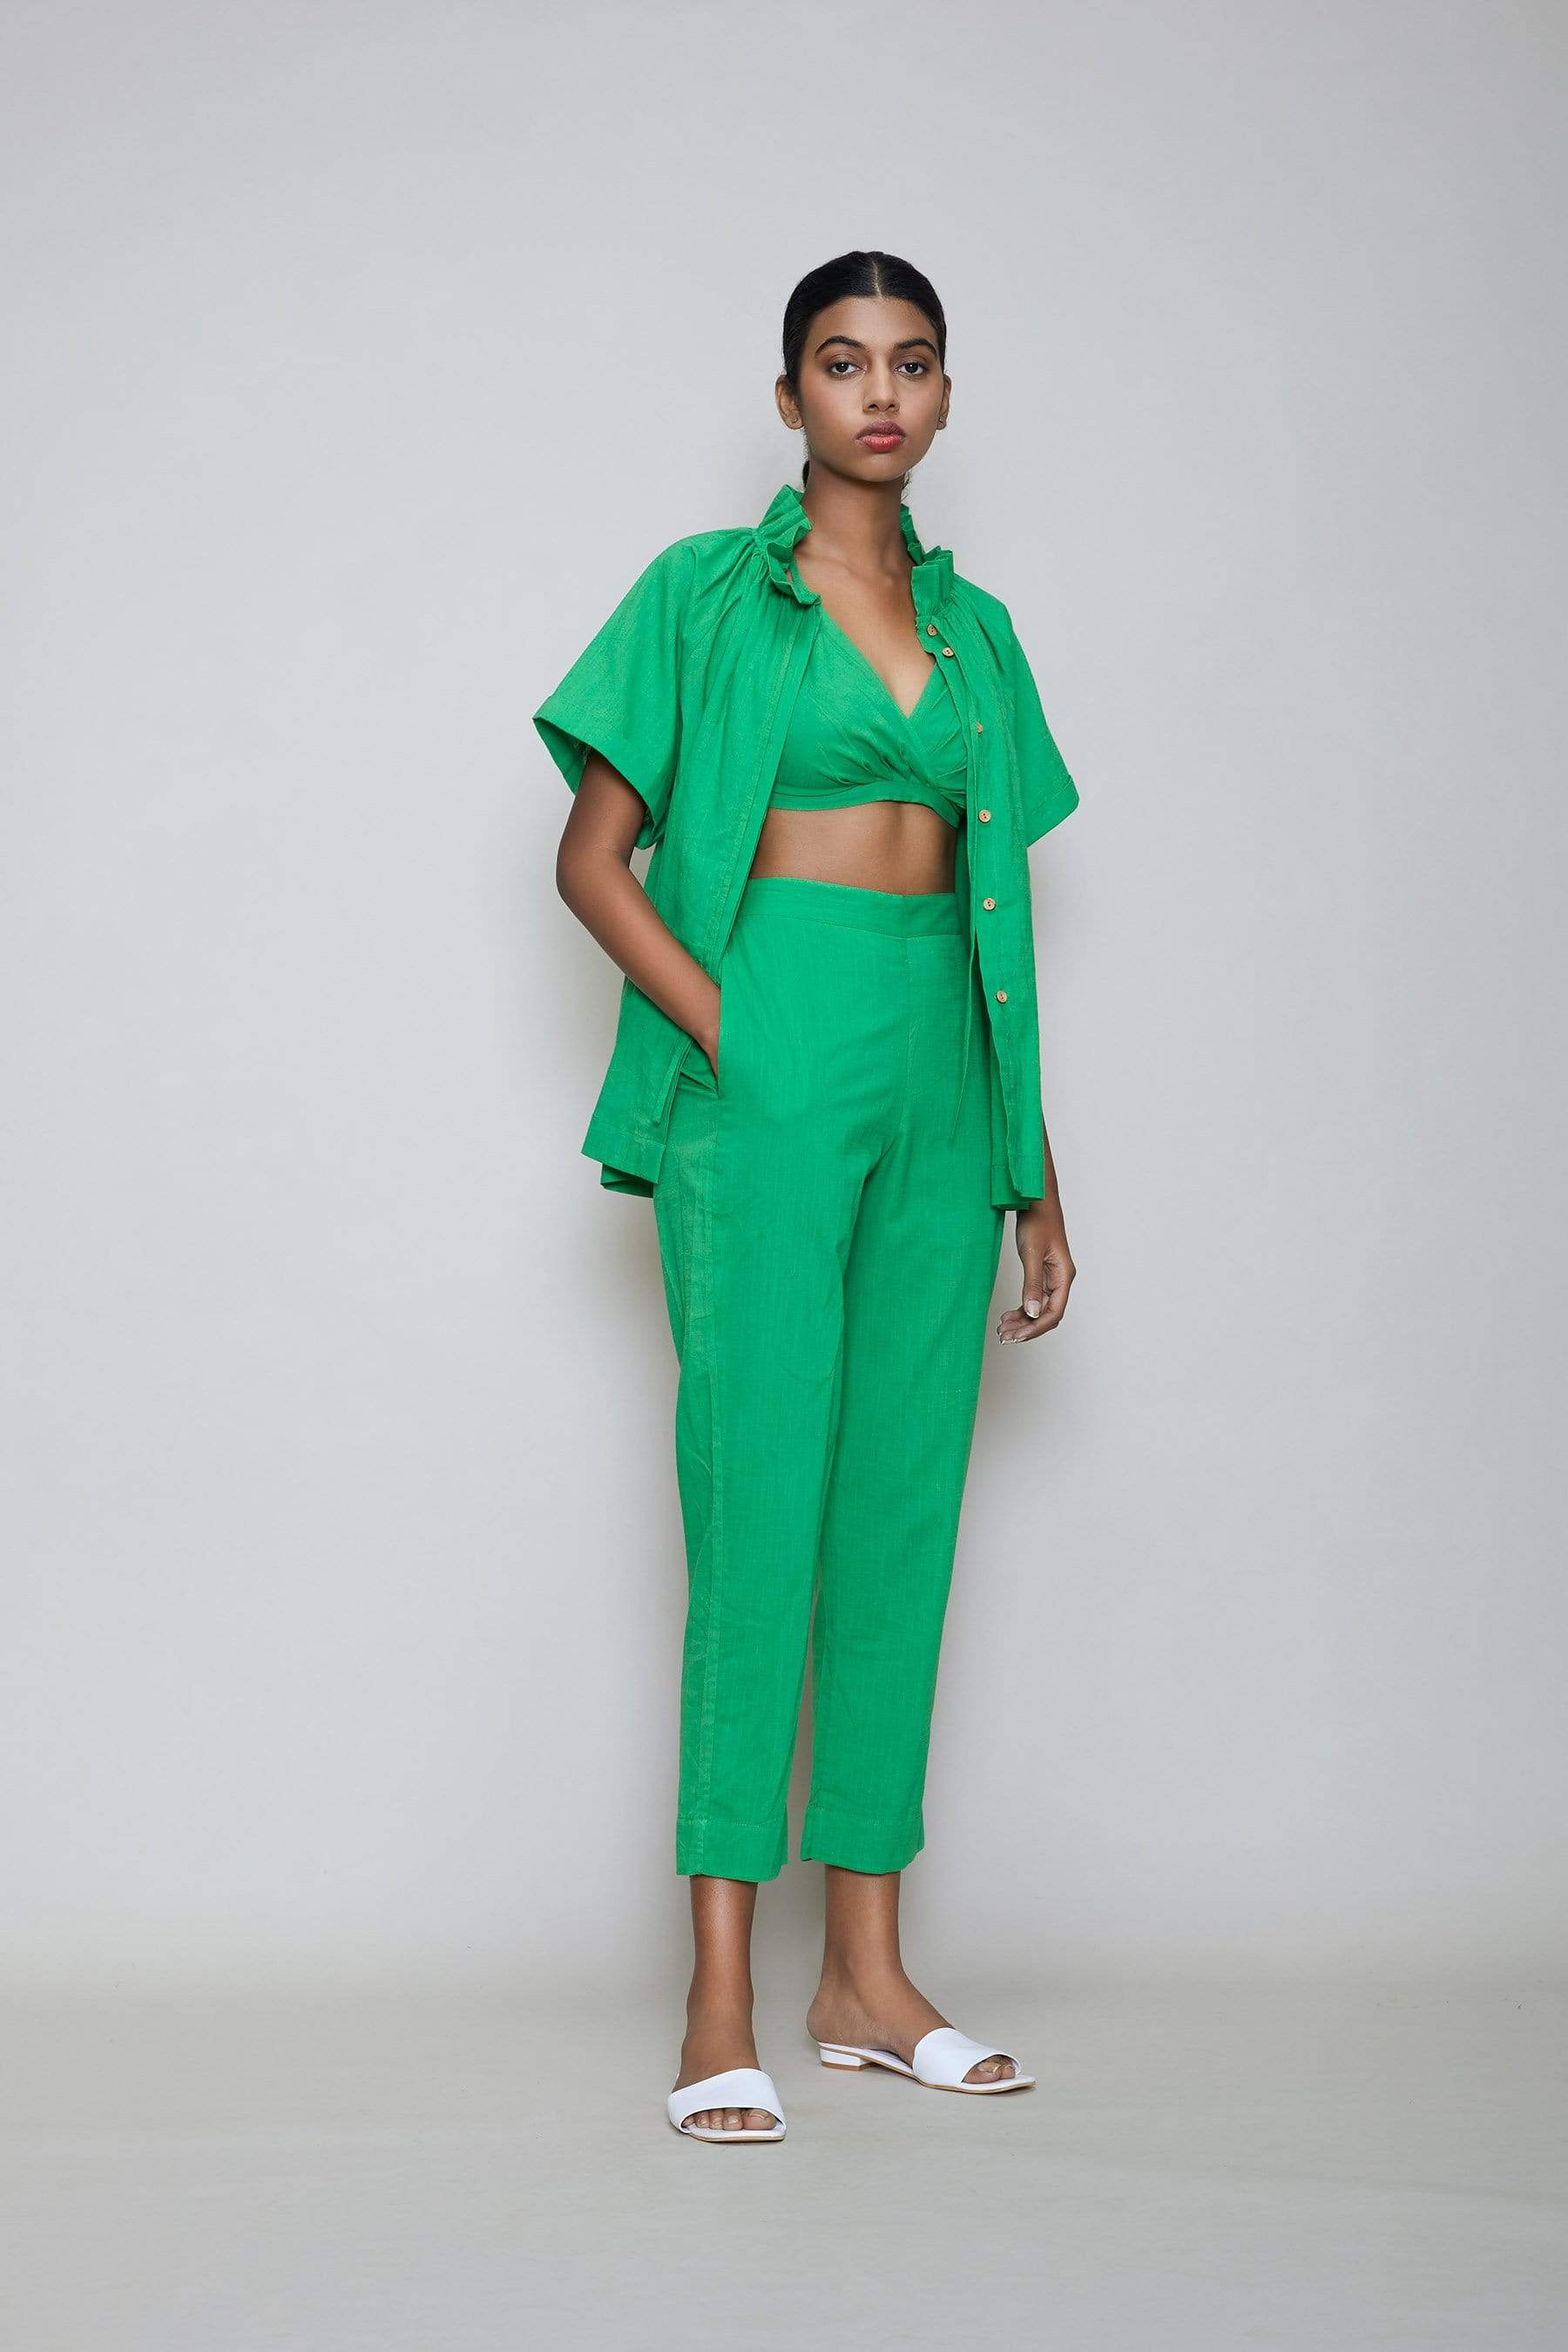 Zara Olive Green Cargo Pants Size 2 | eBay